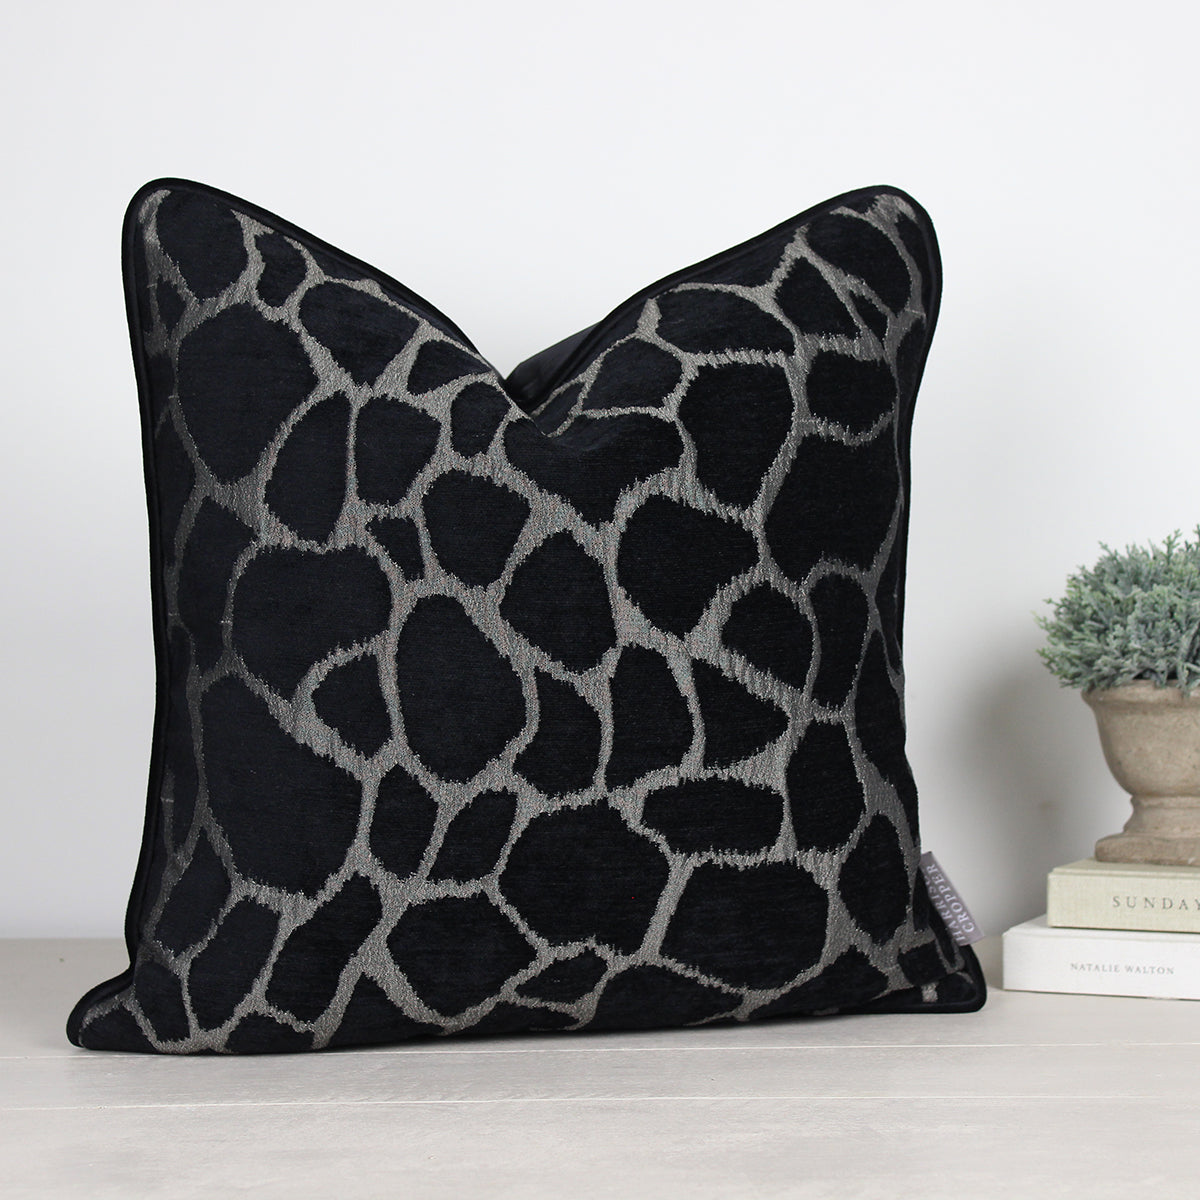 Kenya Silver & Black Giraffe Piped Cushion